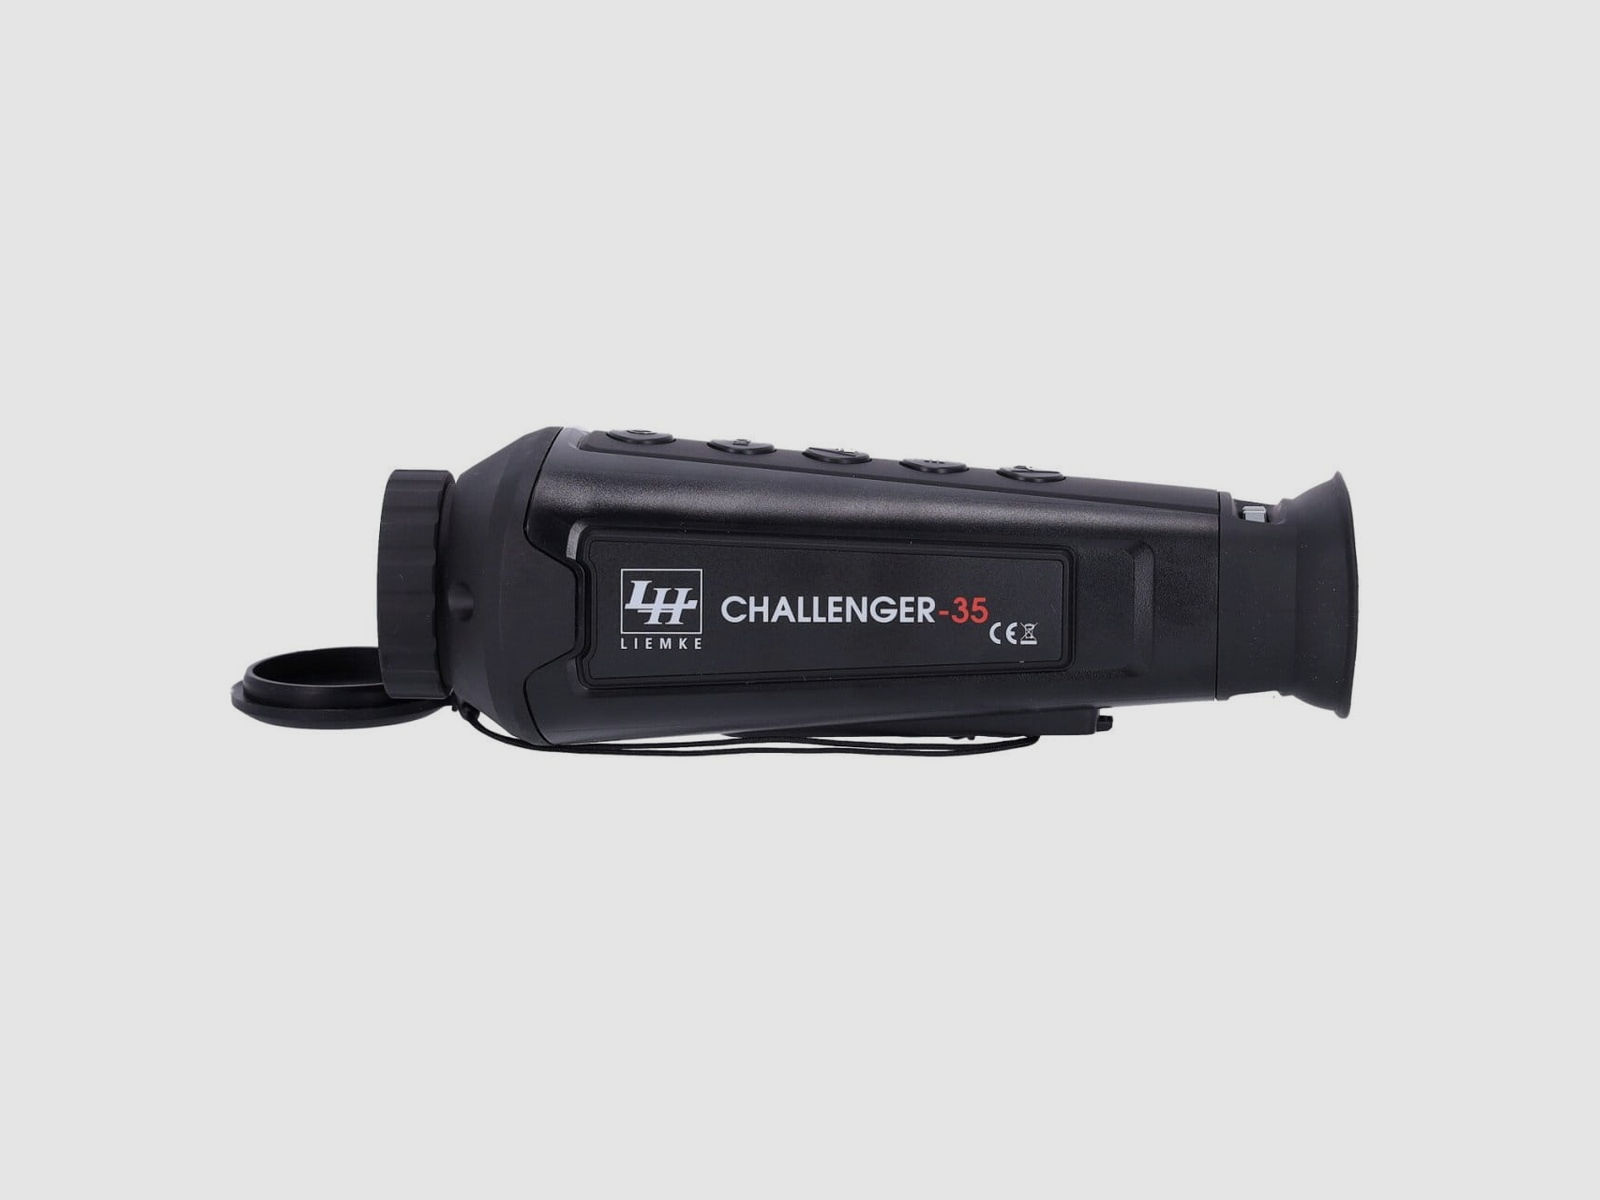 Liemke Challenger-35 Wärmebildkamera